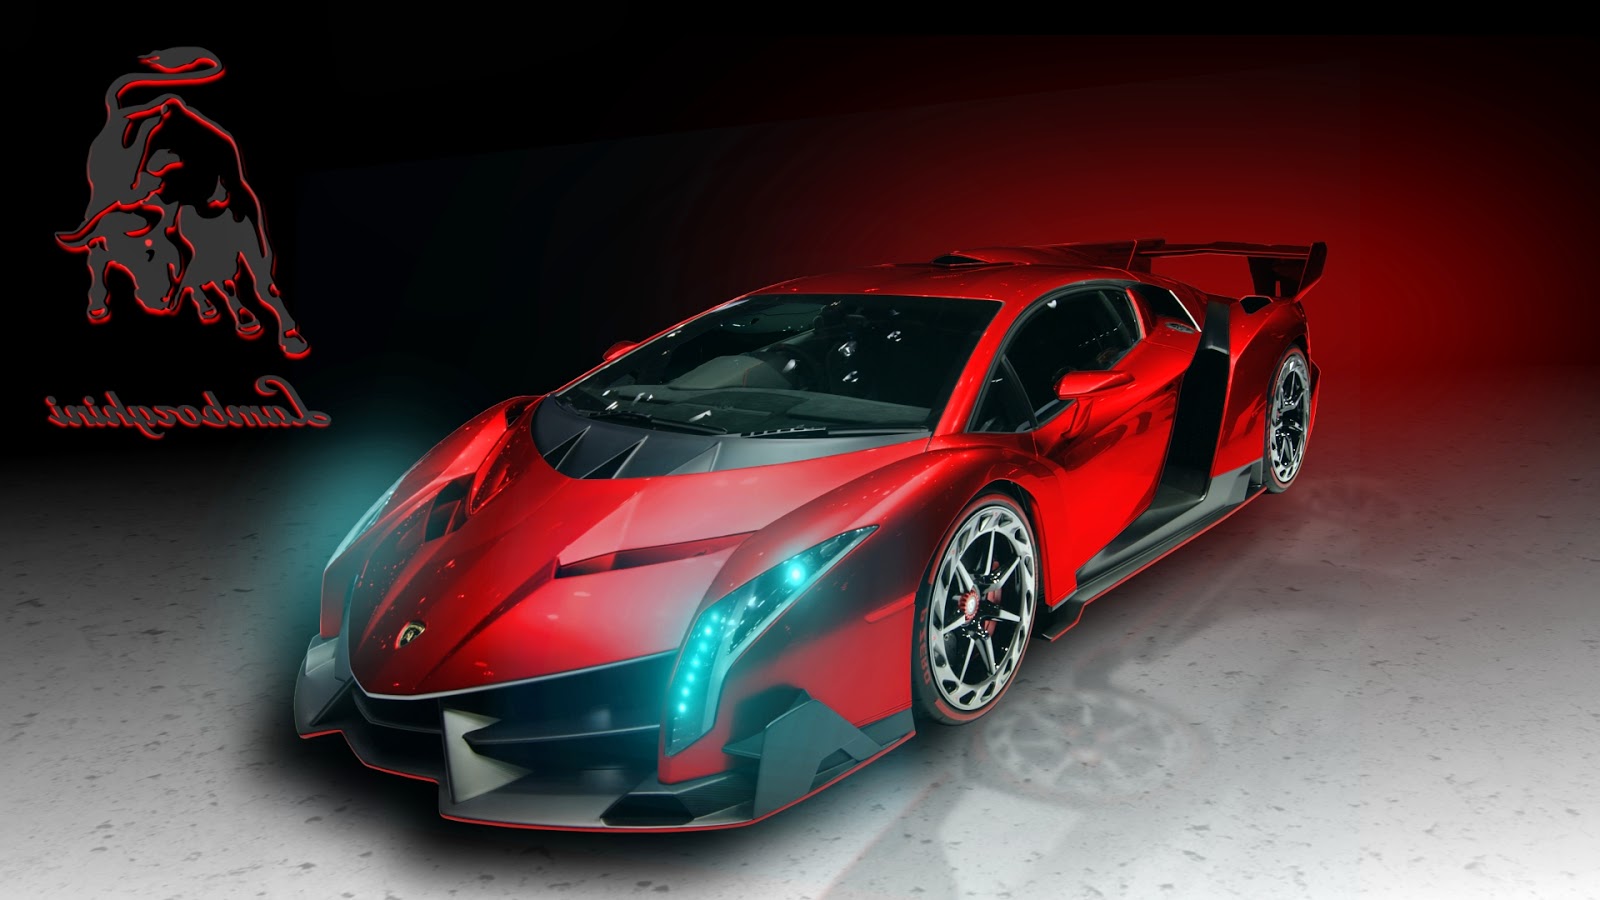 Free download Lamborghini Veneno Red Art HD Wallpaper The Best New Cars